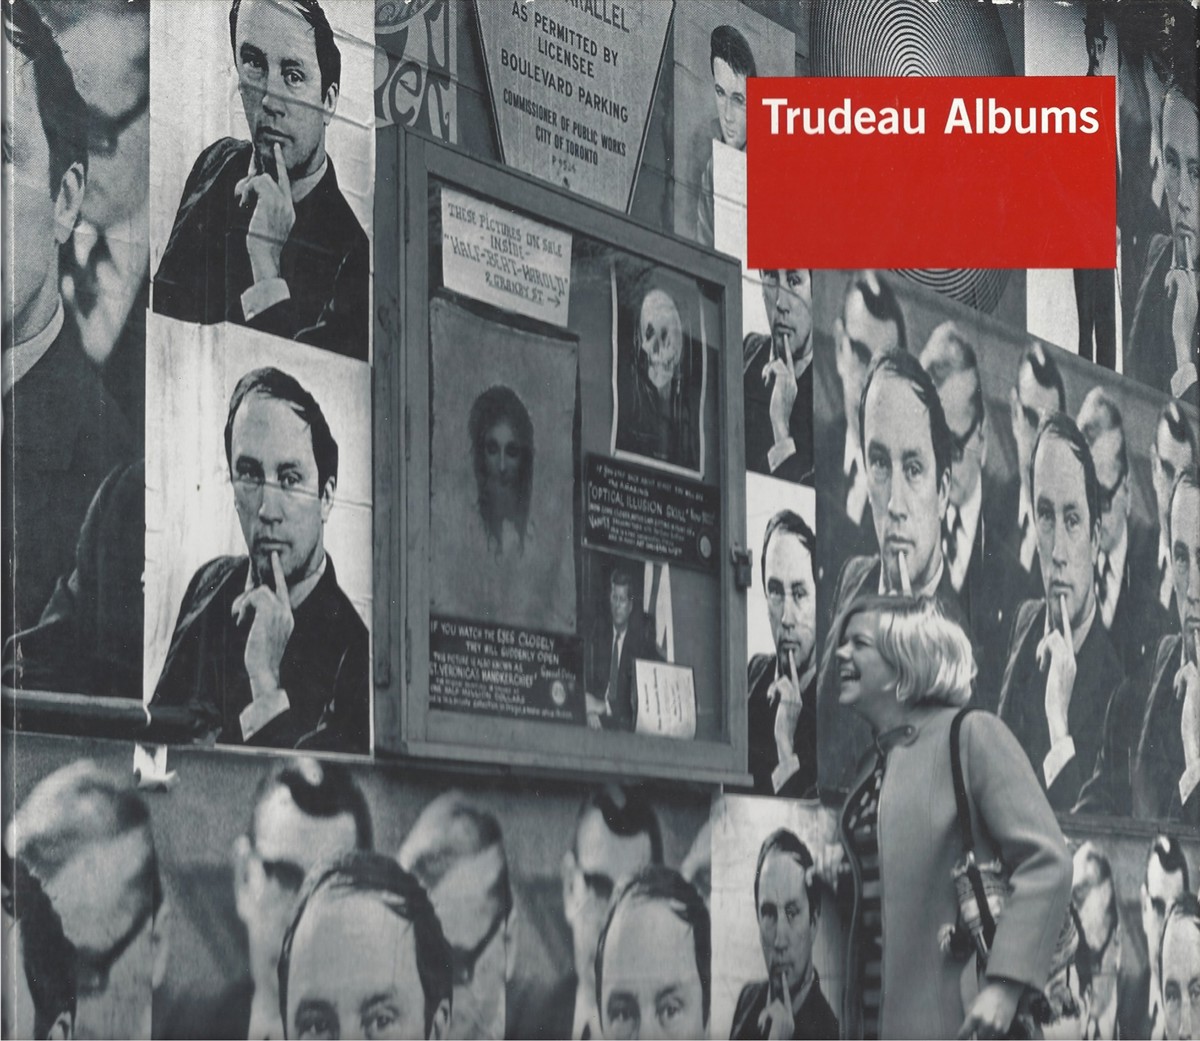 ANNAU CATHERINE, J. L. GRANASTEIN, ALISON GORDON, MORDECAI RICHLER - Trudeau Albums